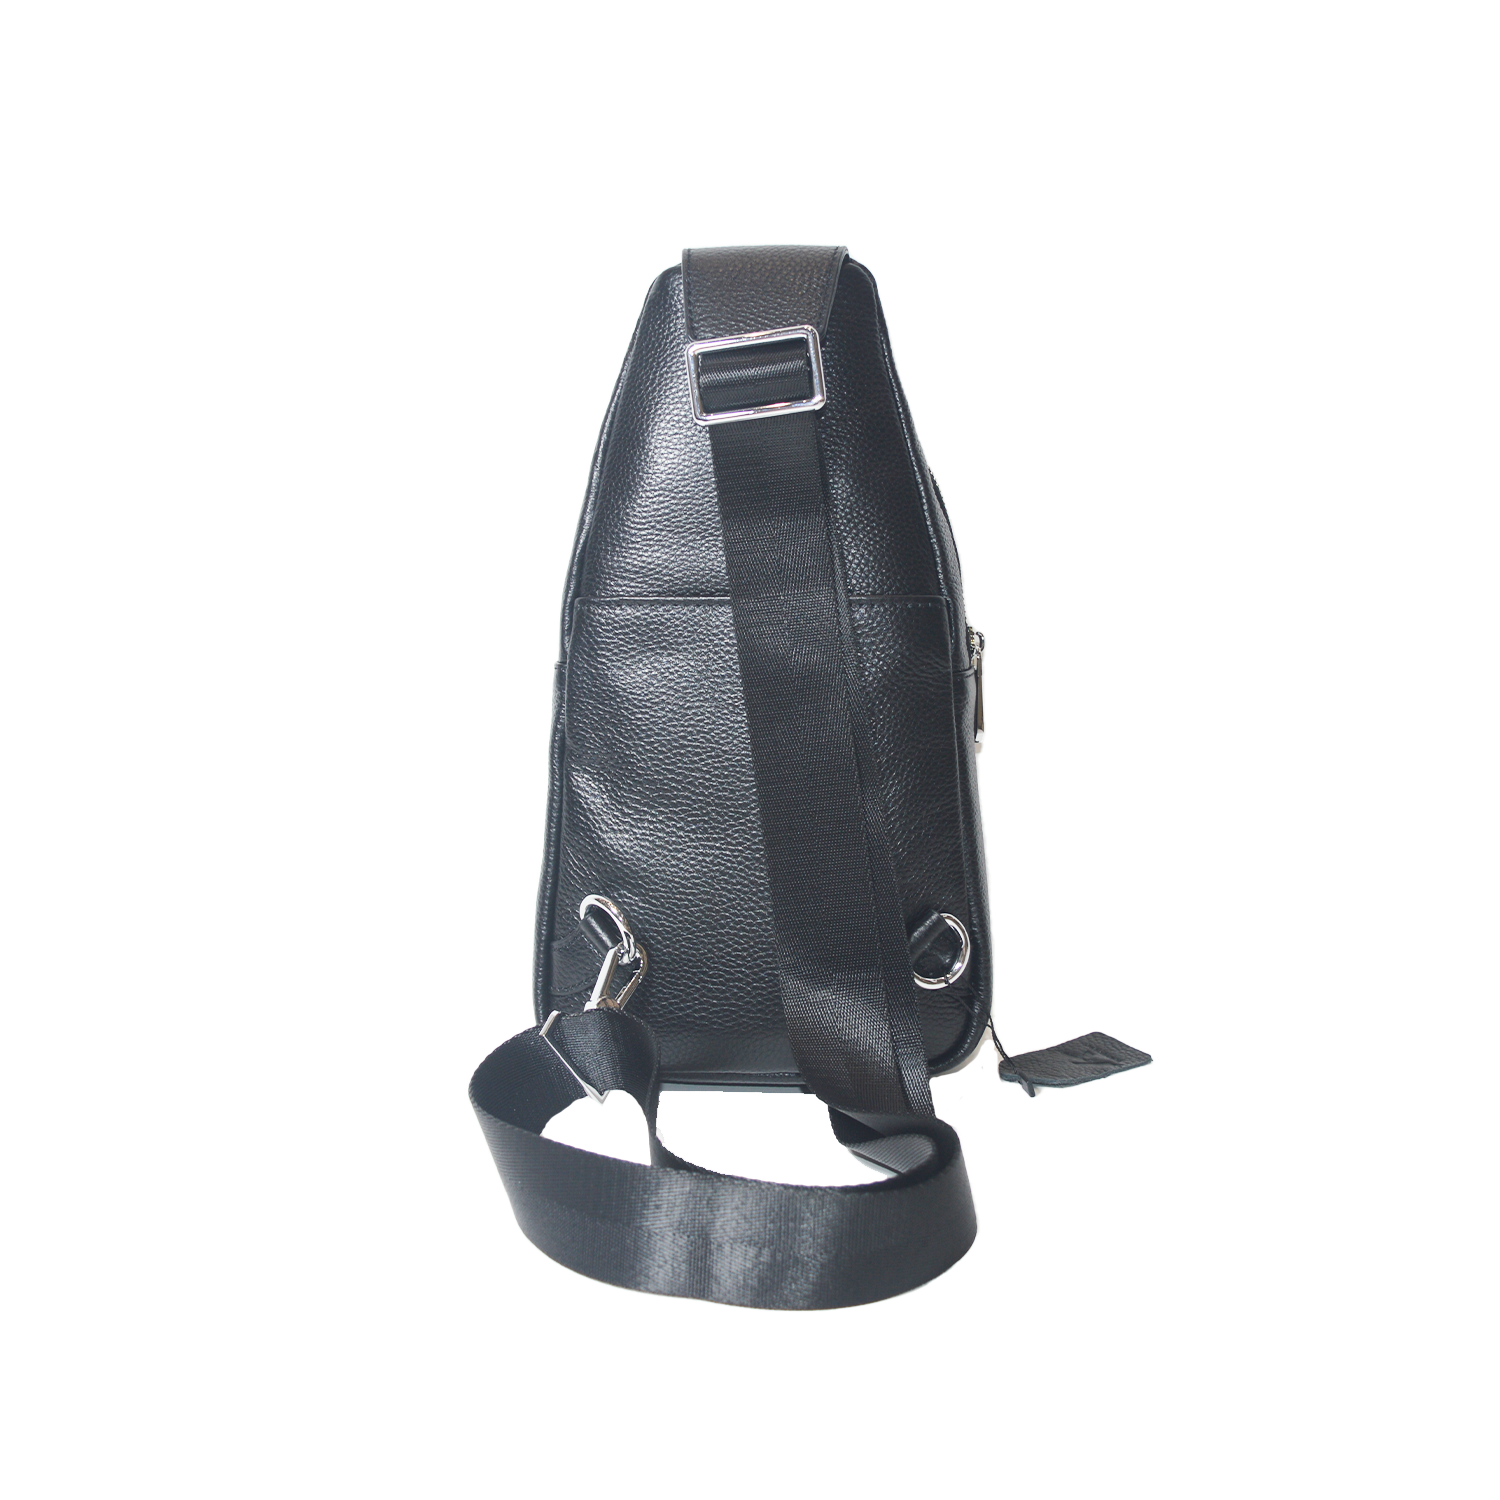 Genuine Leather Sling Bag for Men and Women Crossbody Small Fanny Packs Chest Travel Backpack Daypack Black